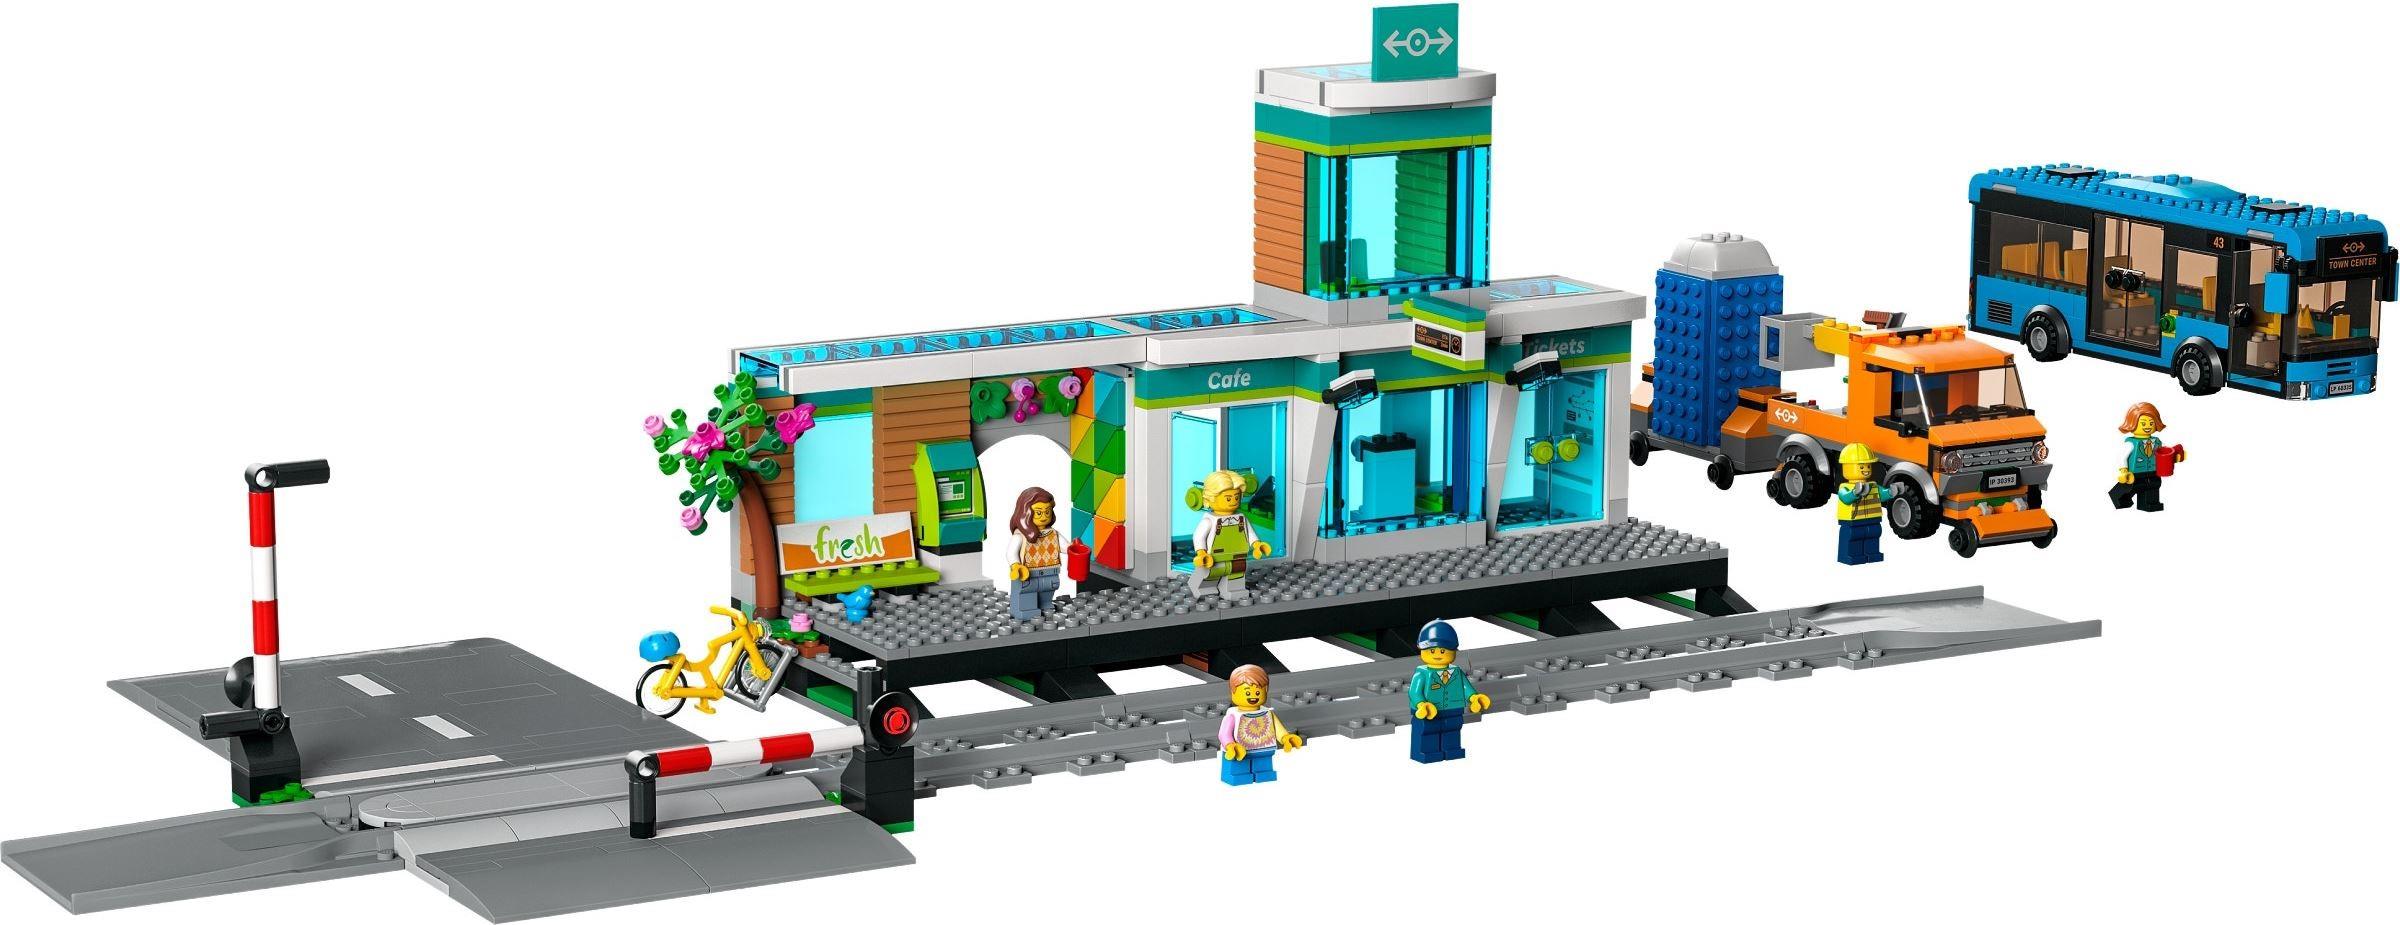 LEGO City Train Station 7937 Brand New Sealed Free Shipping